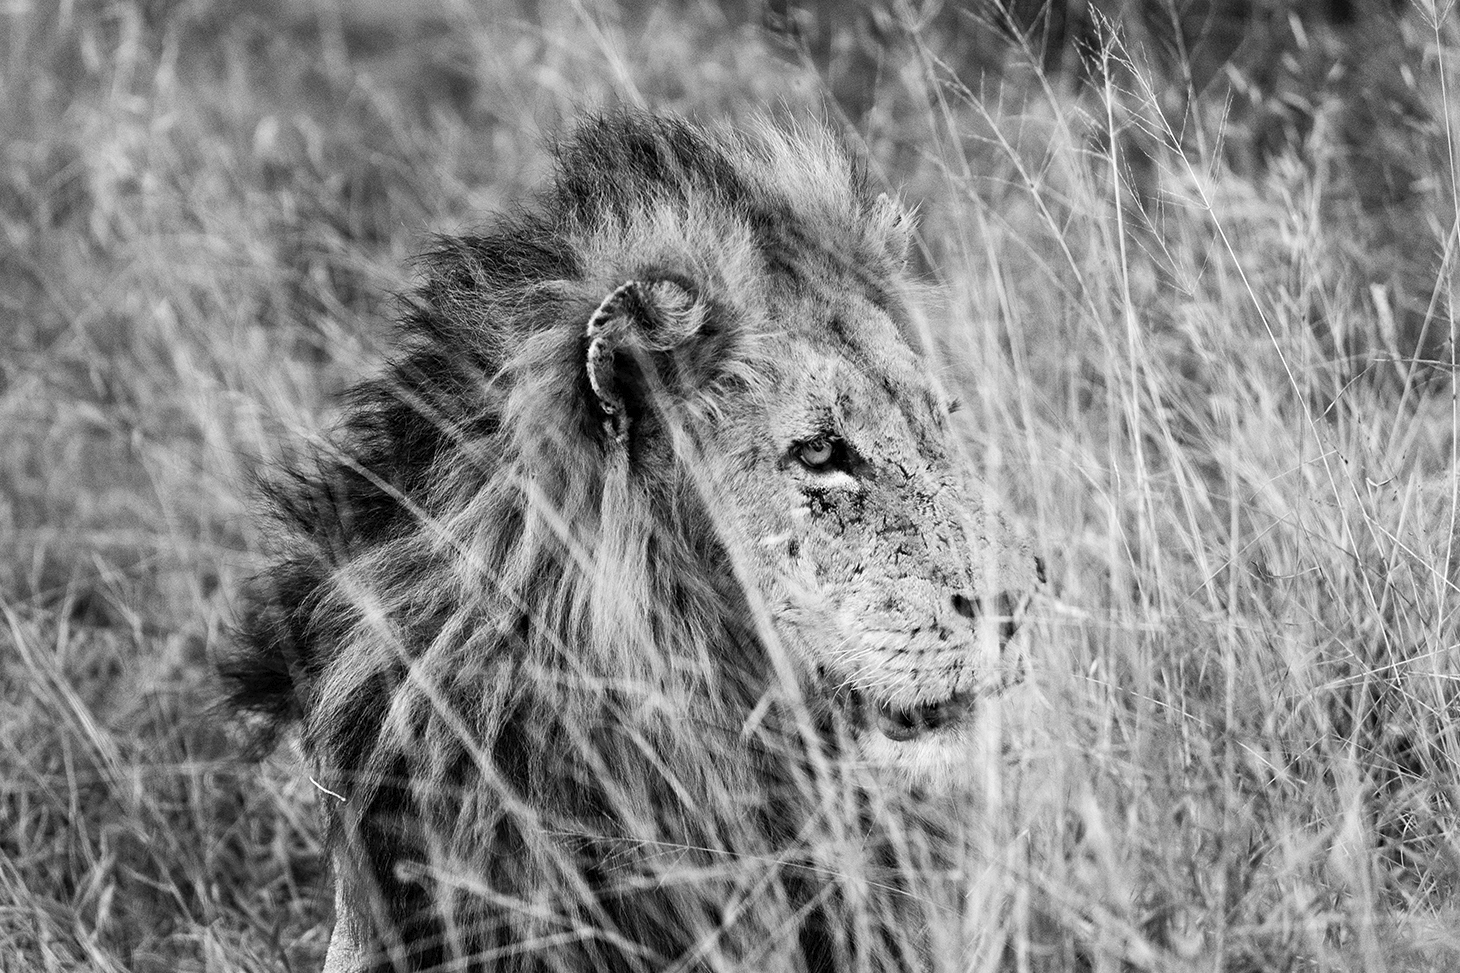 Wild Africa // Great Kruger Park, South Africa